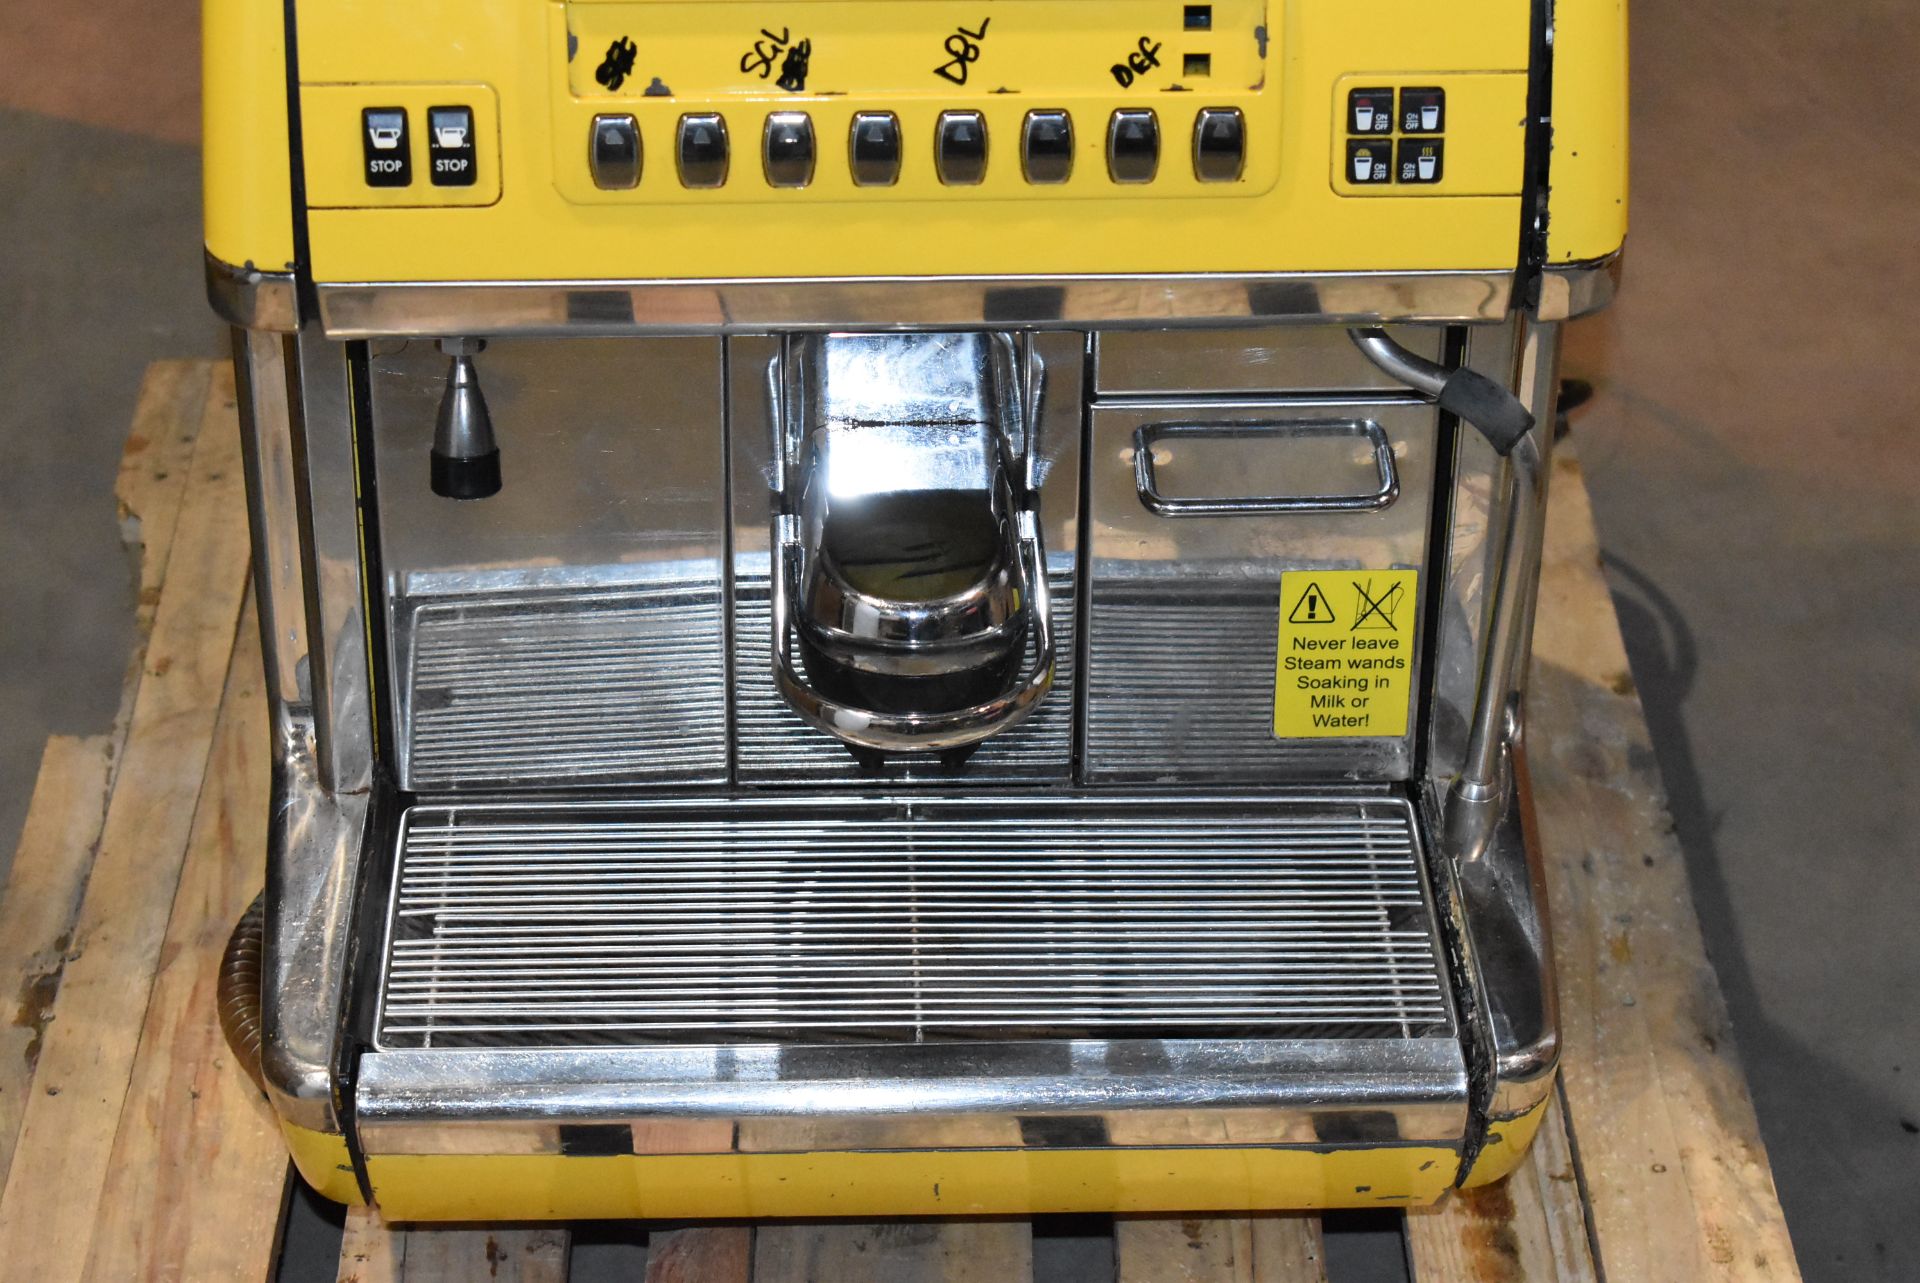 1 x La Cimbali S39 Barsystem Espresso Bean to Cup Coffee Machine - Bright Yellow Finish - 240V Plug - Image 12 of 14